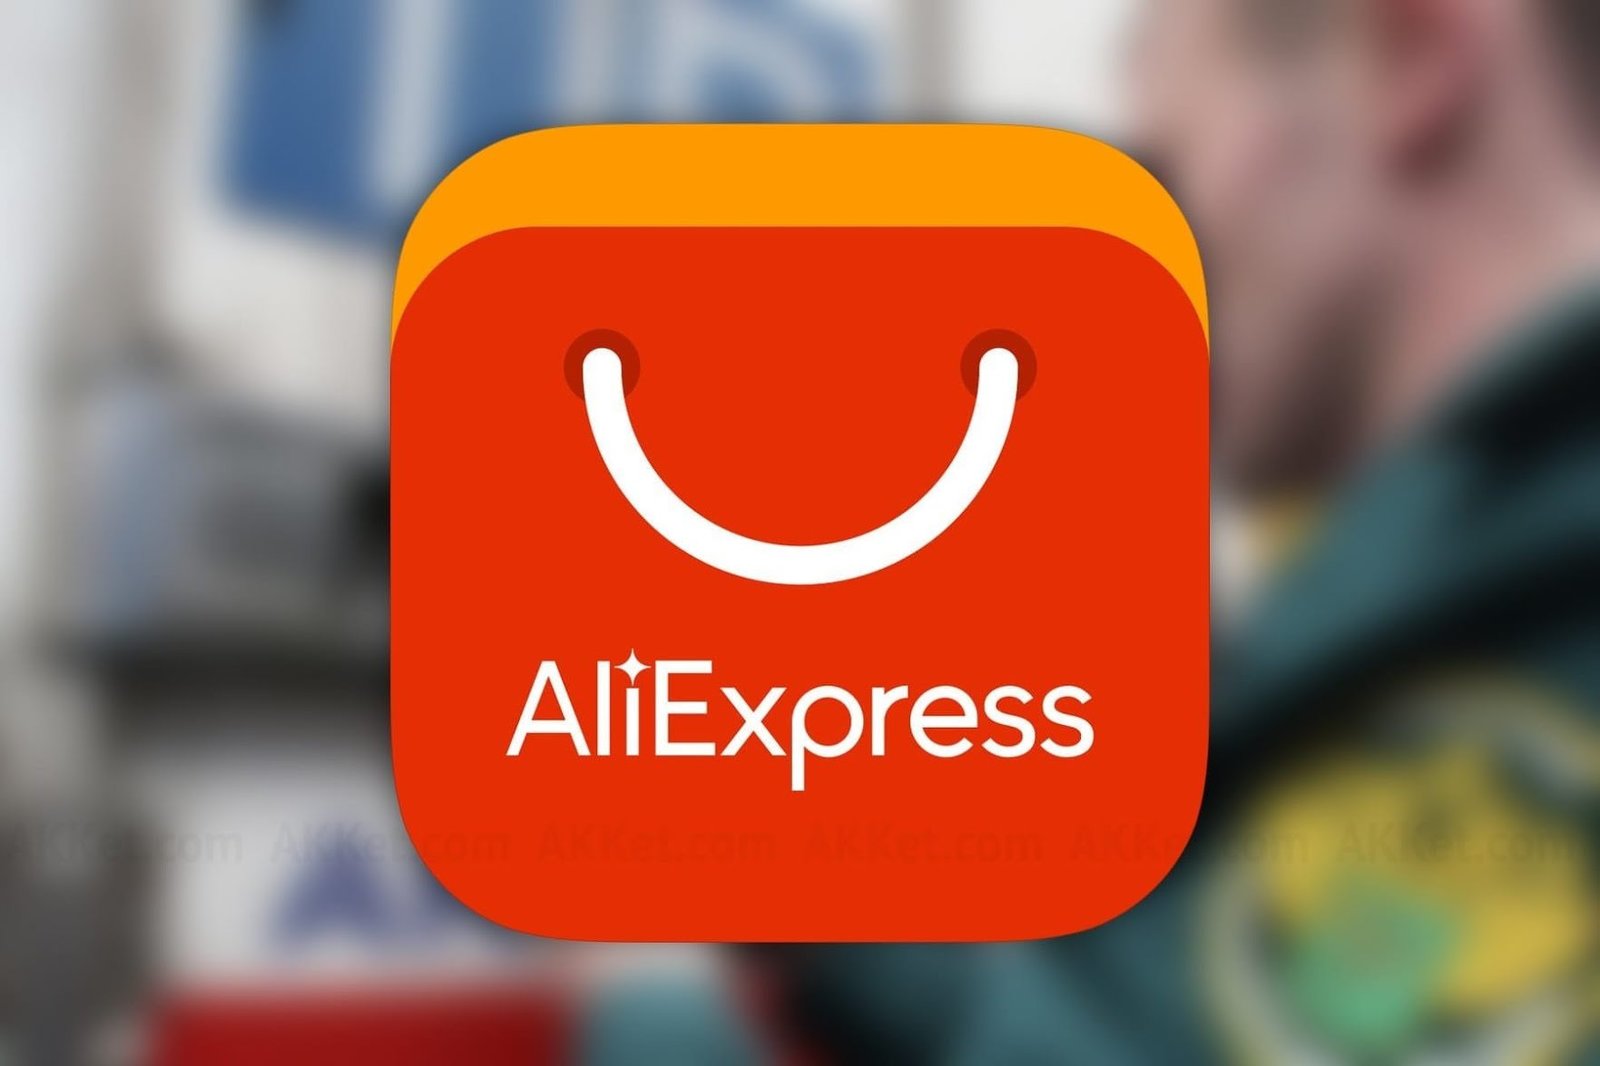 История успеха Alibaba и AliExpress